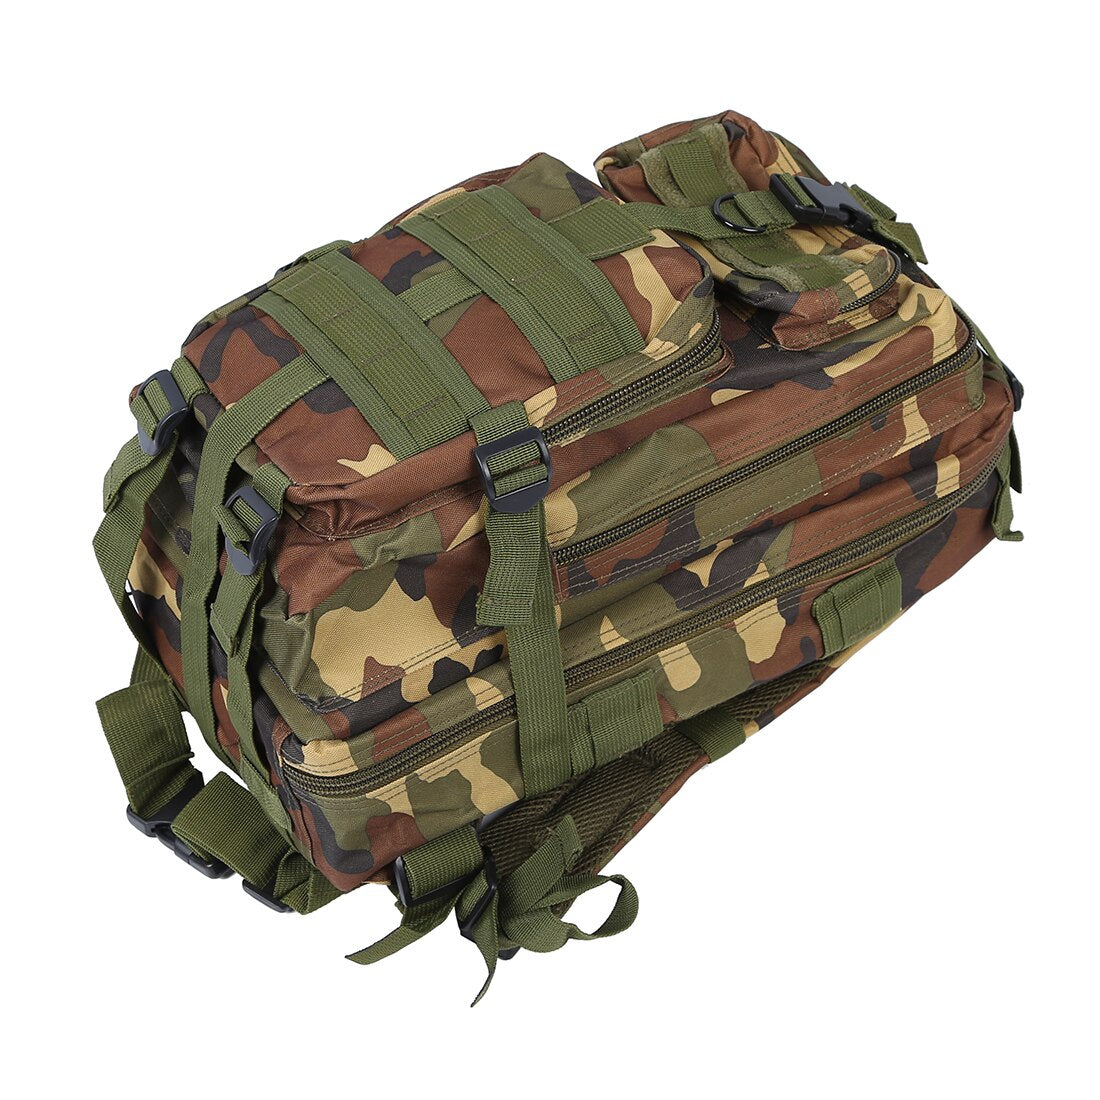 New 30L   Military  Backpack Rucksacks   Trekking Bag Jungle camouflage - ebowsos